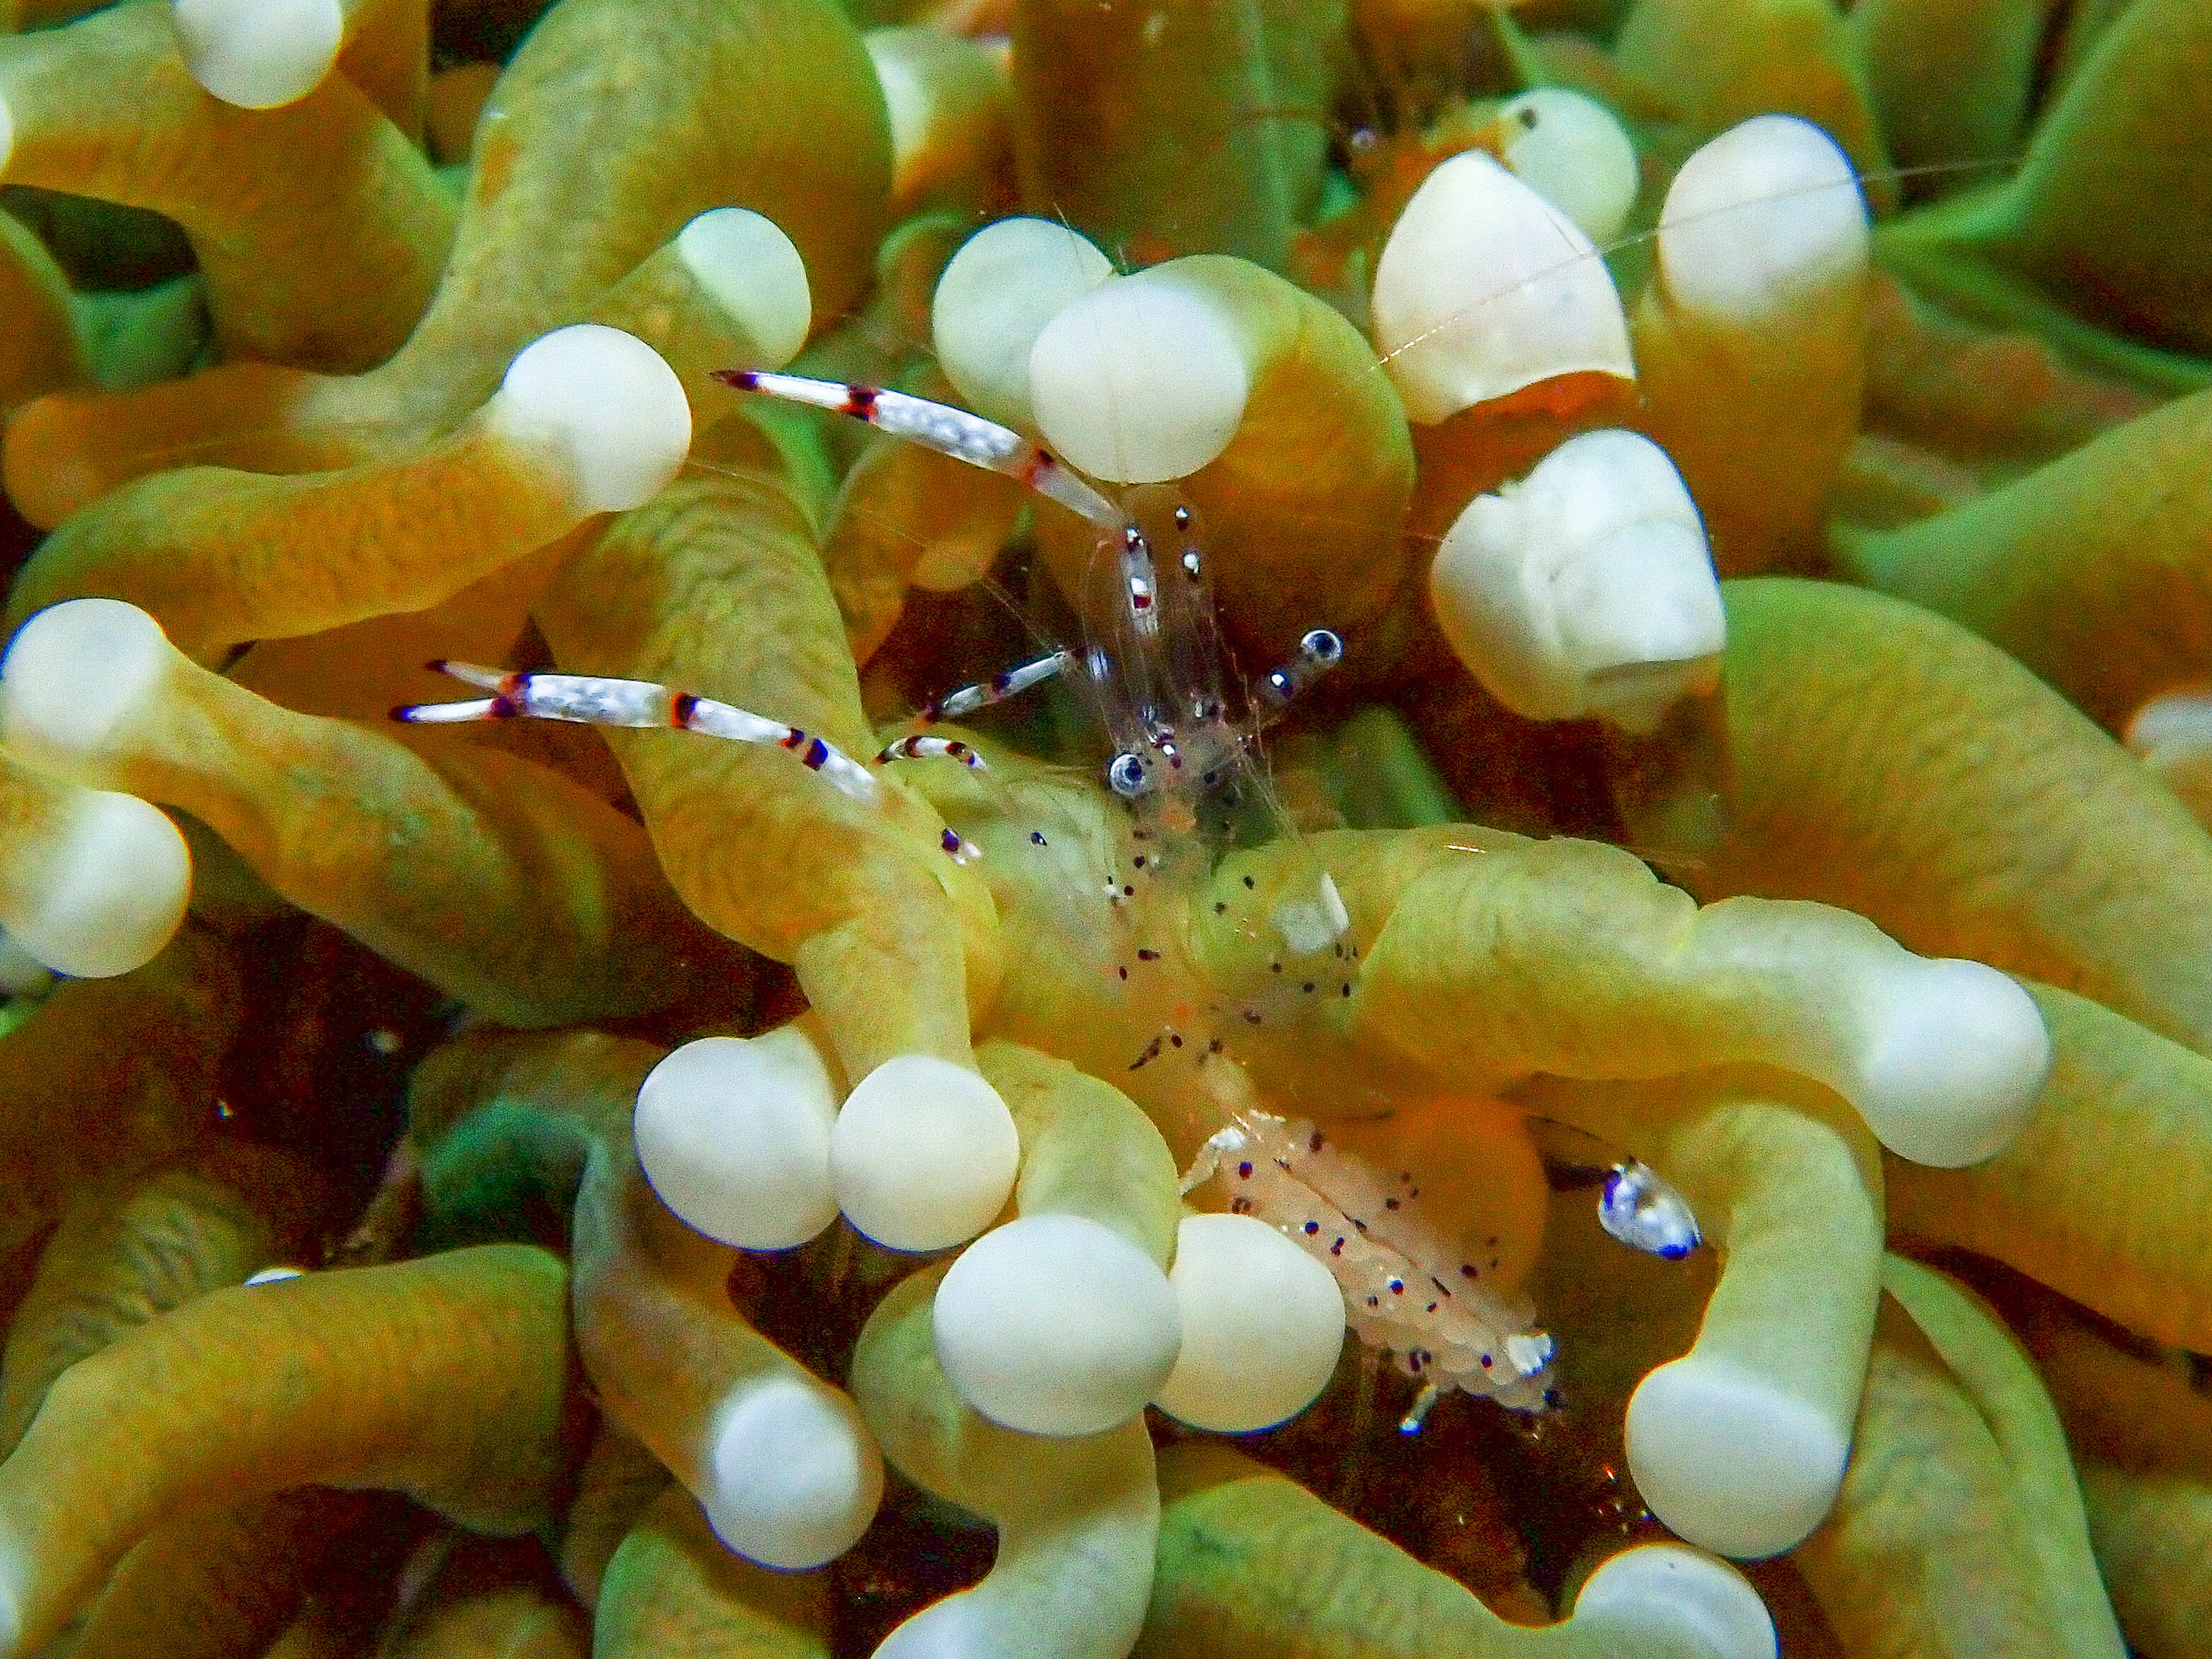 Periclimenes sp shrimp, Wirey Bay, Witu Islands